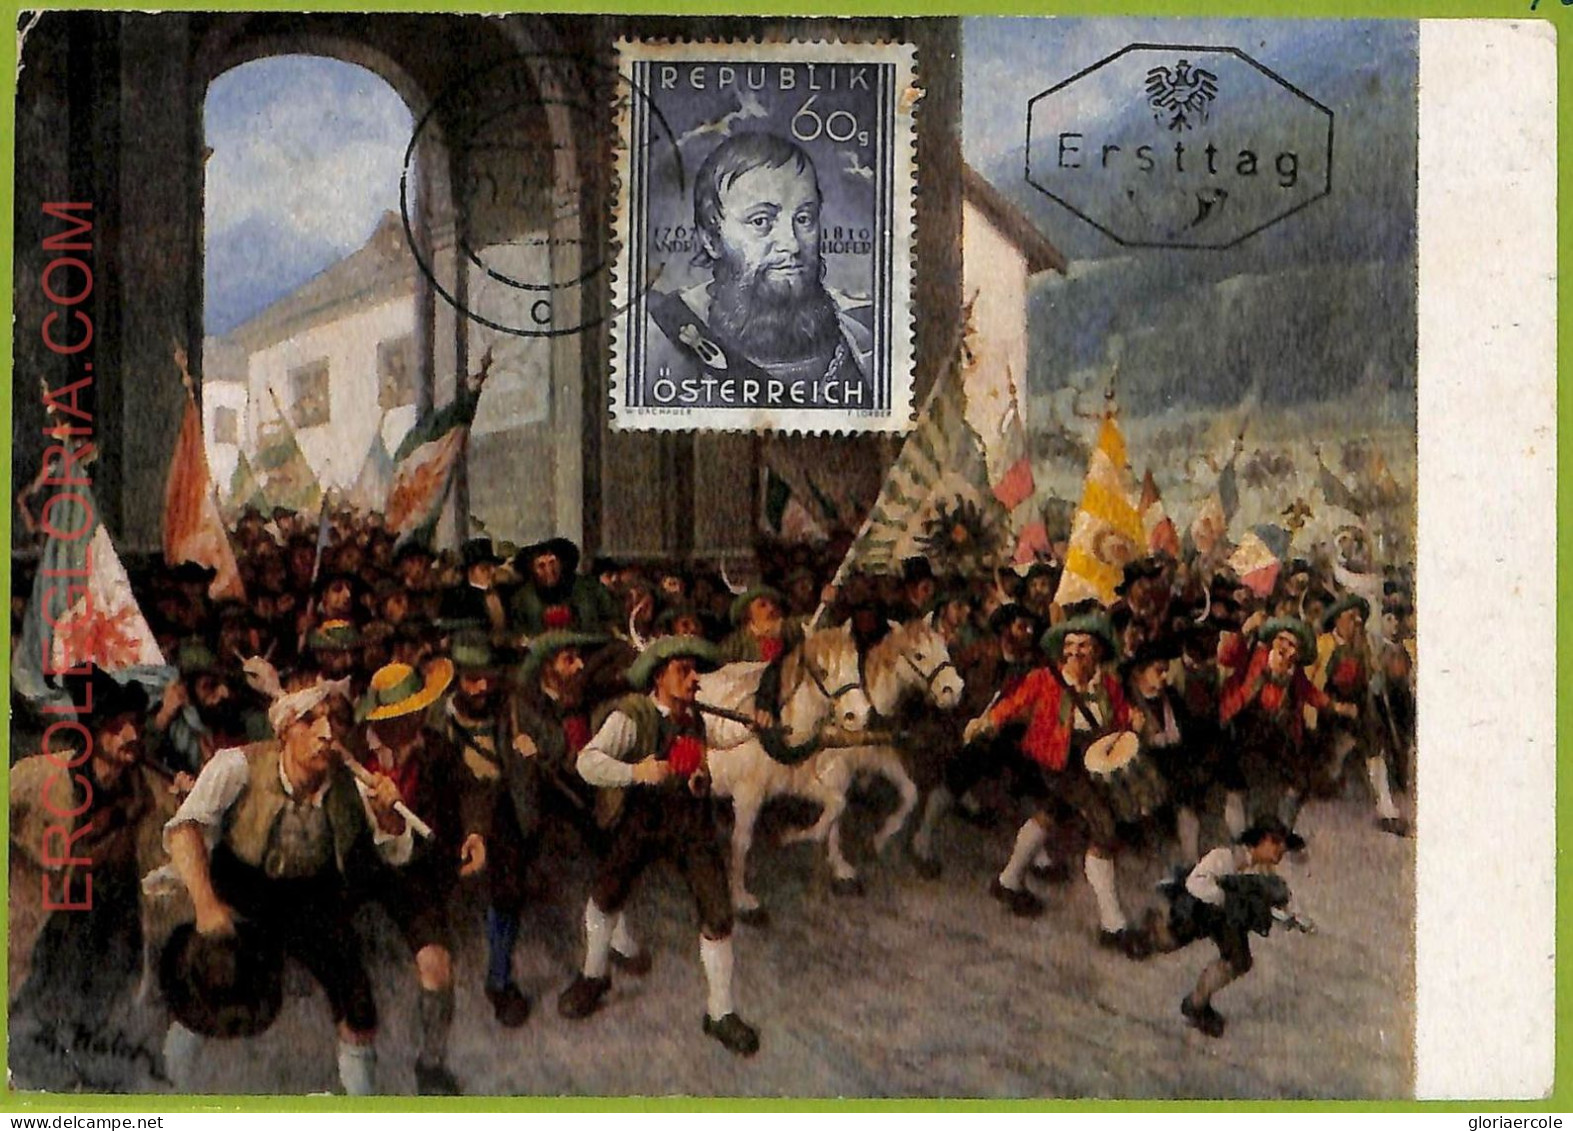 Ad3305 - AUSTRIA - Postal History - MAXIMUM CARD - 1959 - SALZBURG - Maximumkarten (MC)